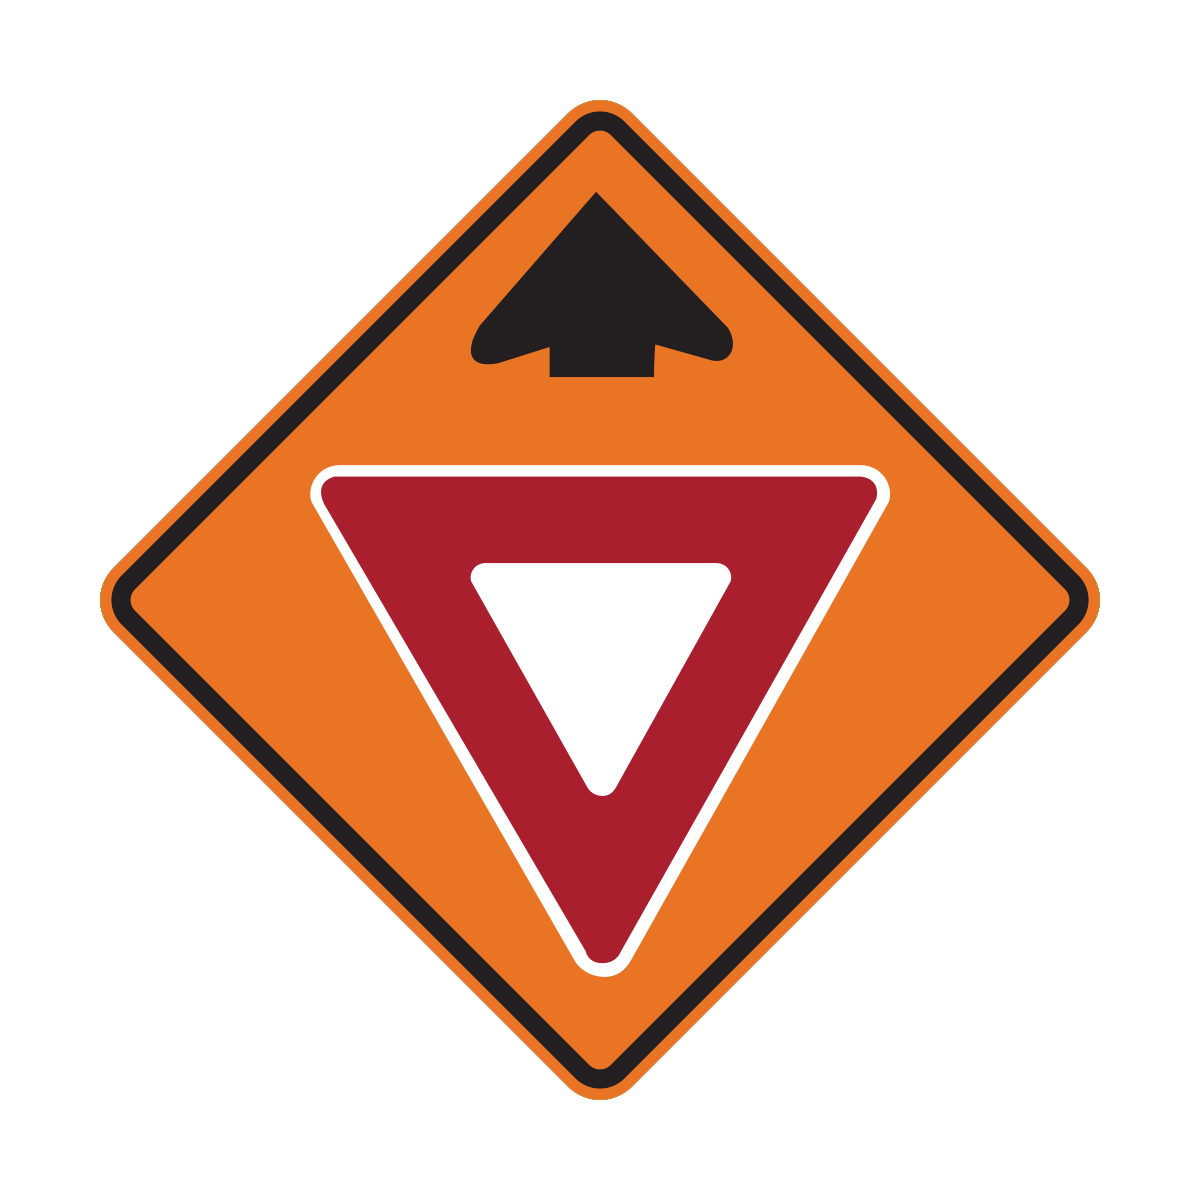 Yield Ahead Symbol Construction Sign (W3-2c)